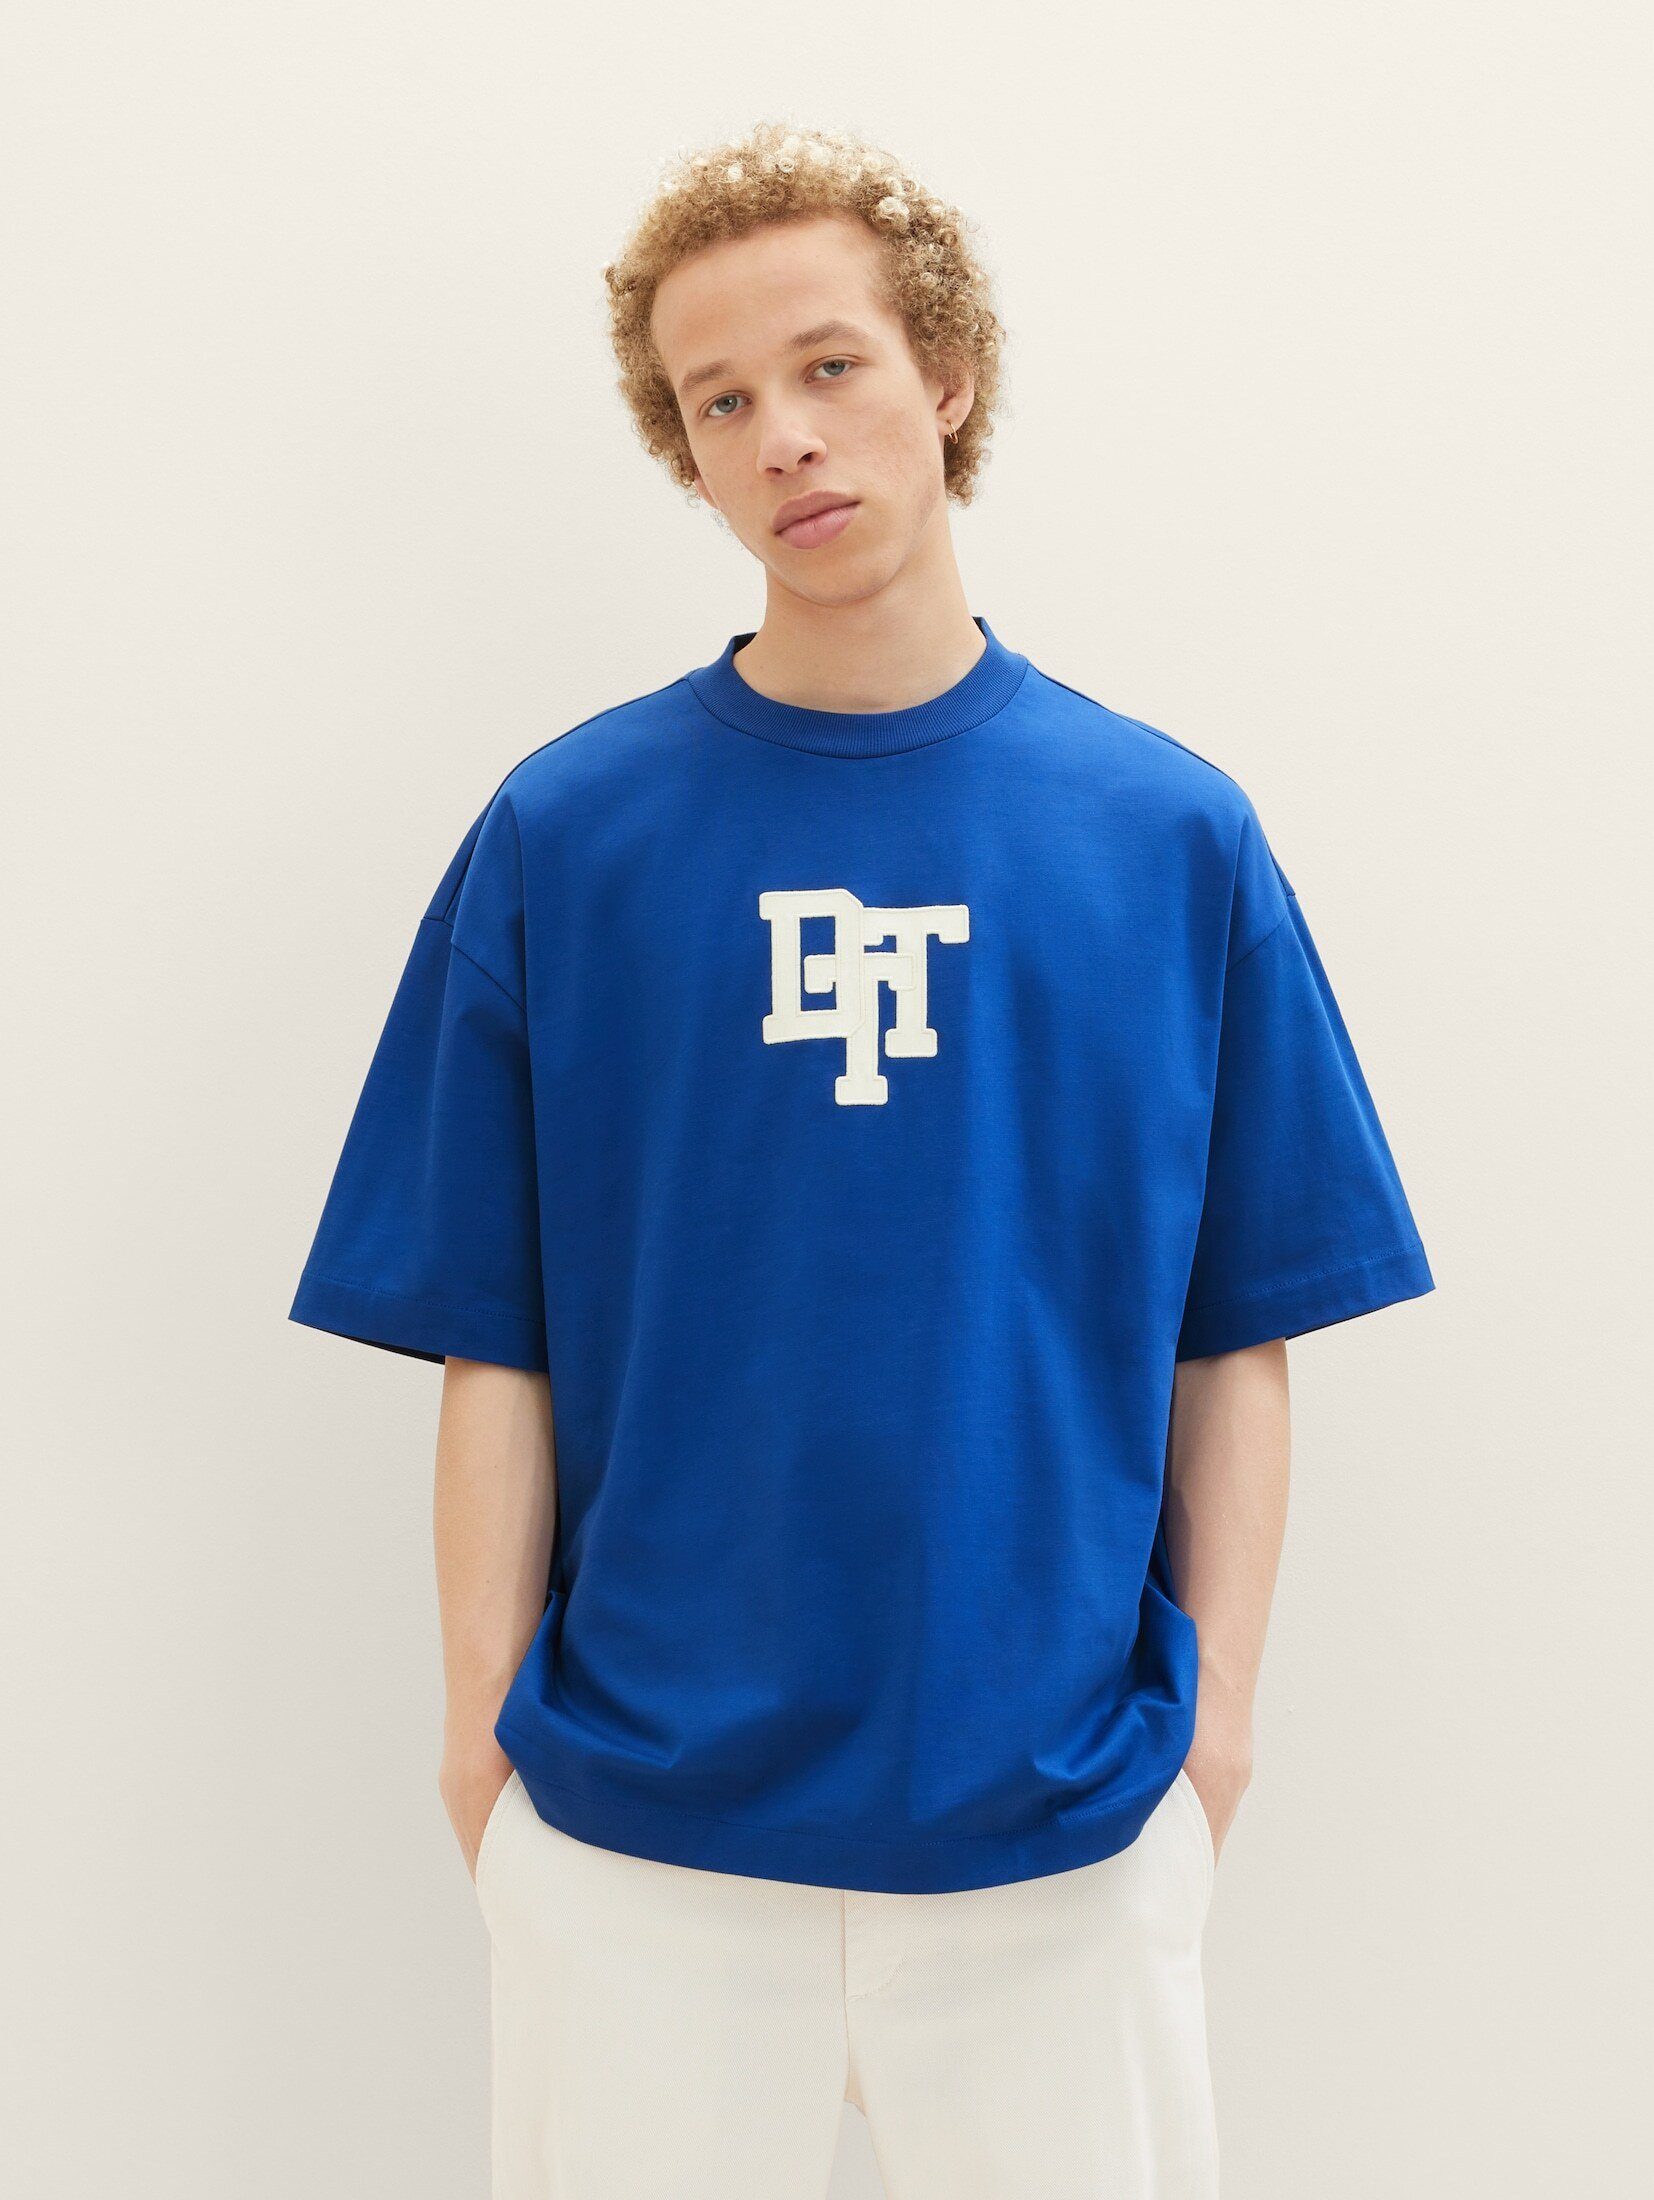 TOM TAILOR Denim T-Shirt blue Applikation royal Oversized T-Shirt shiny mit